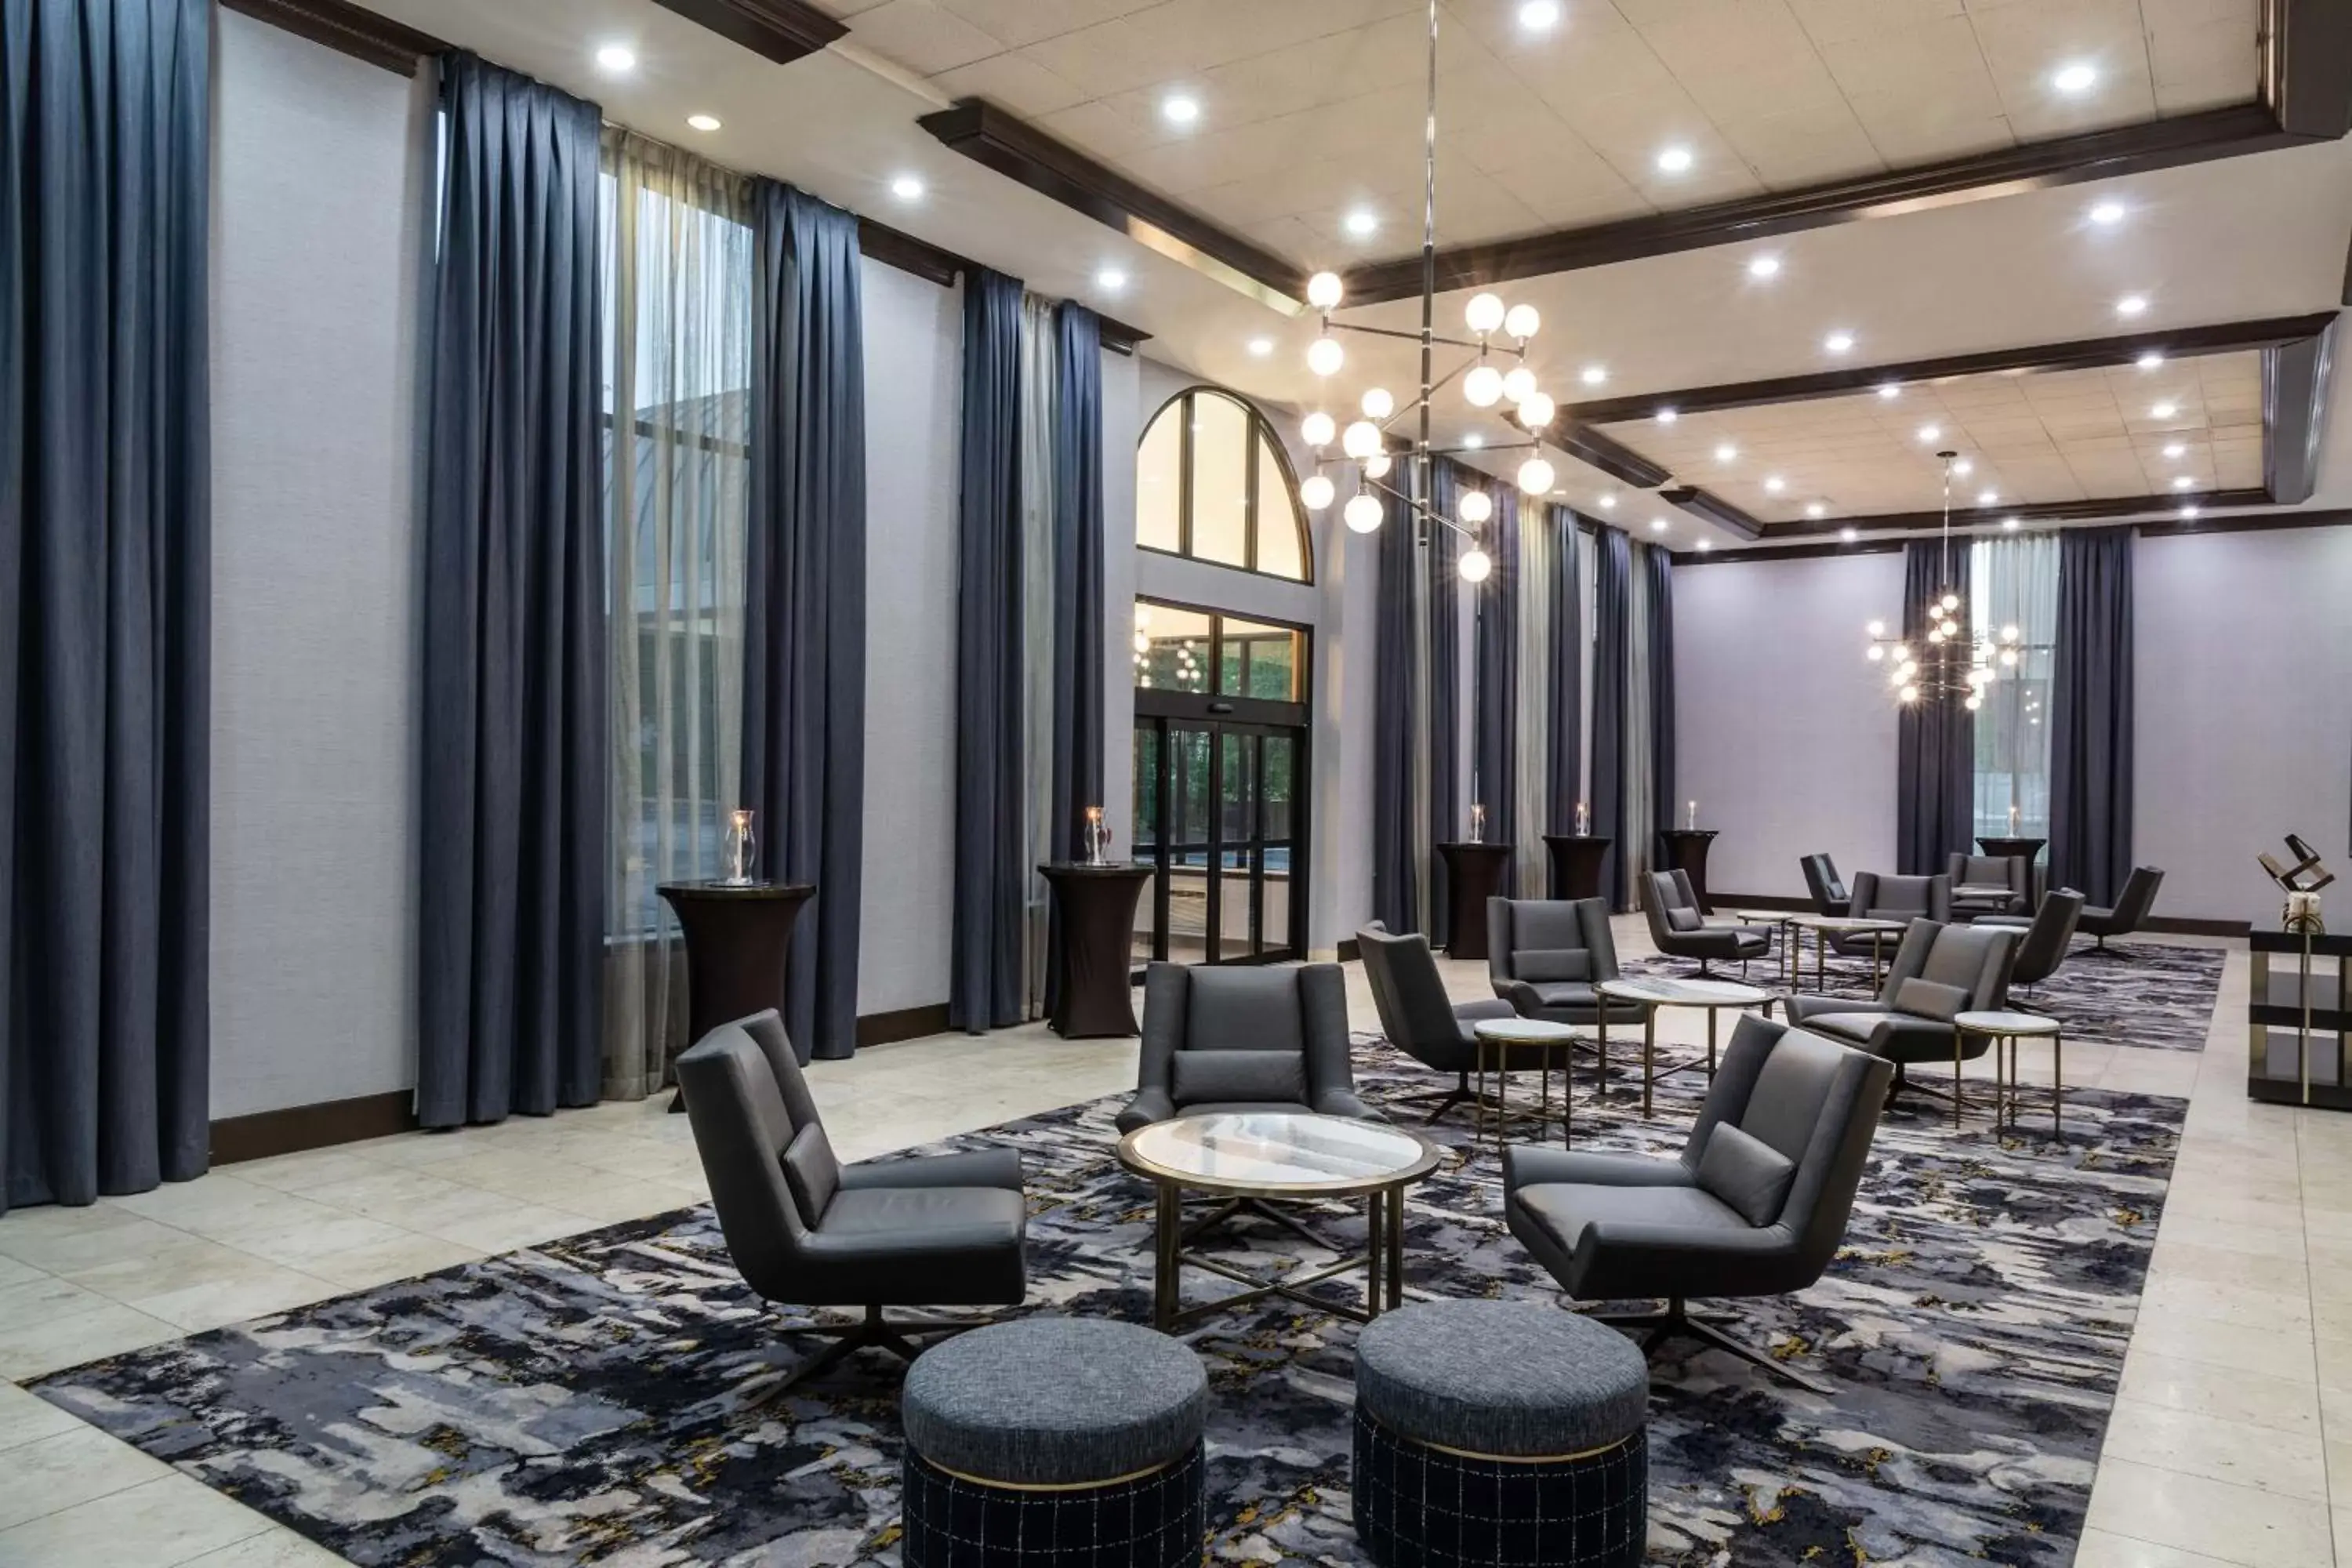 Lobby or reception in Sheraton Ann Arbor Hotel